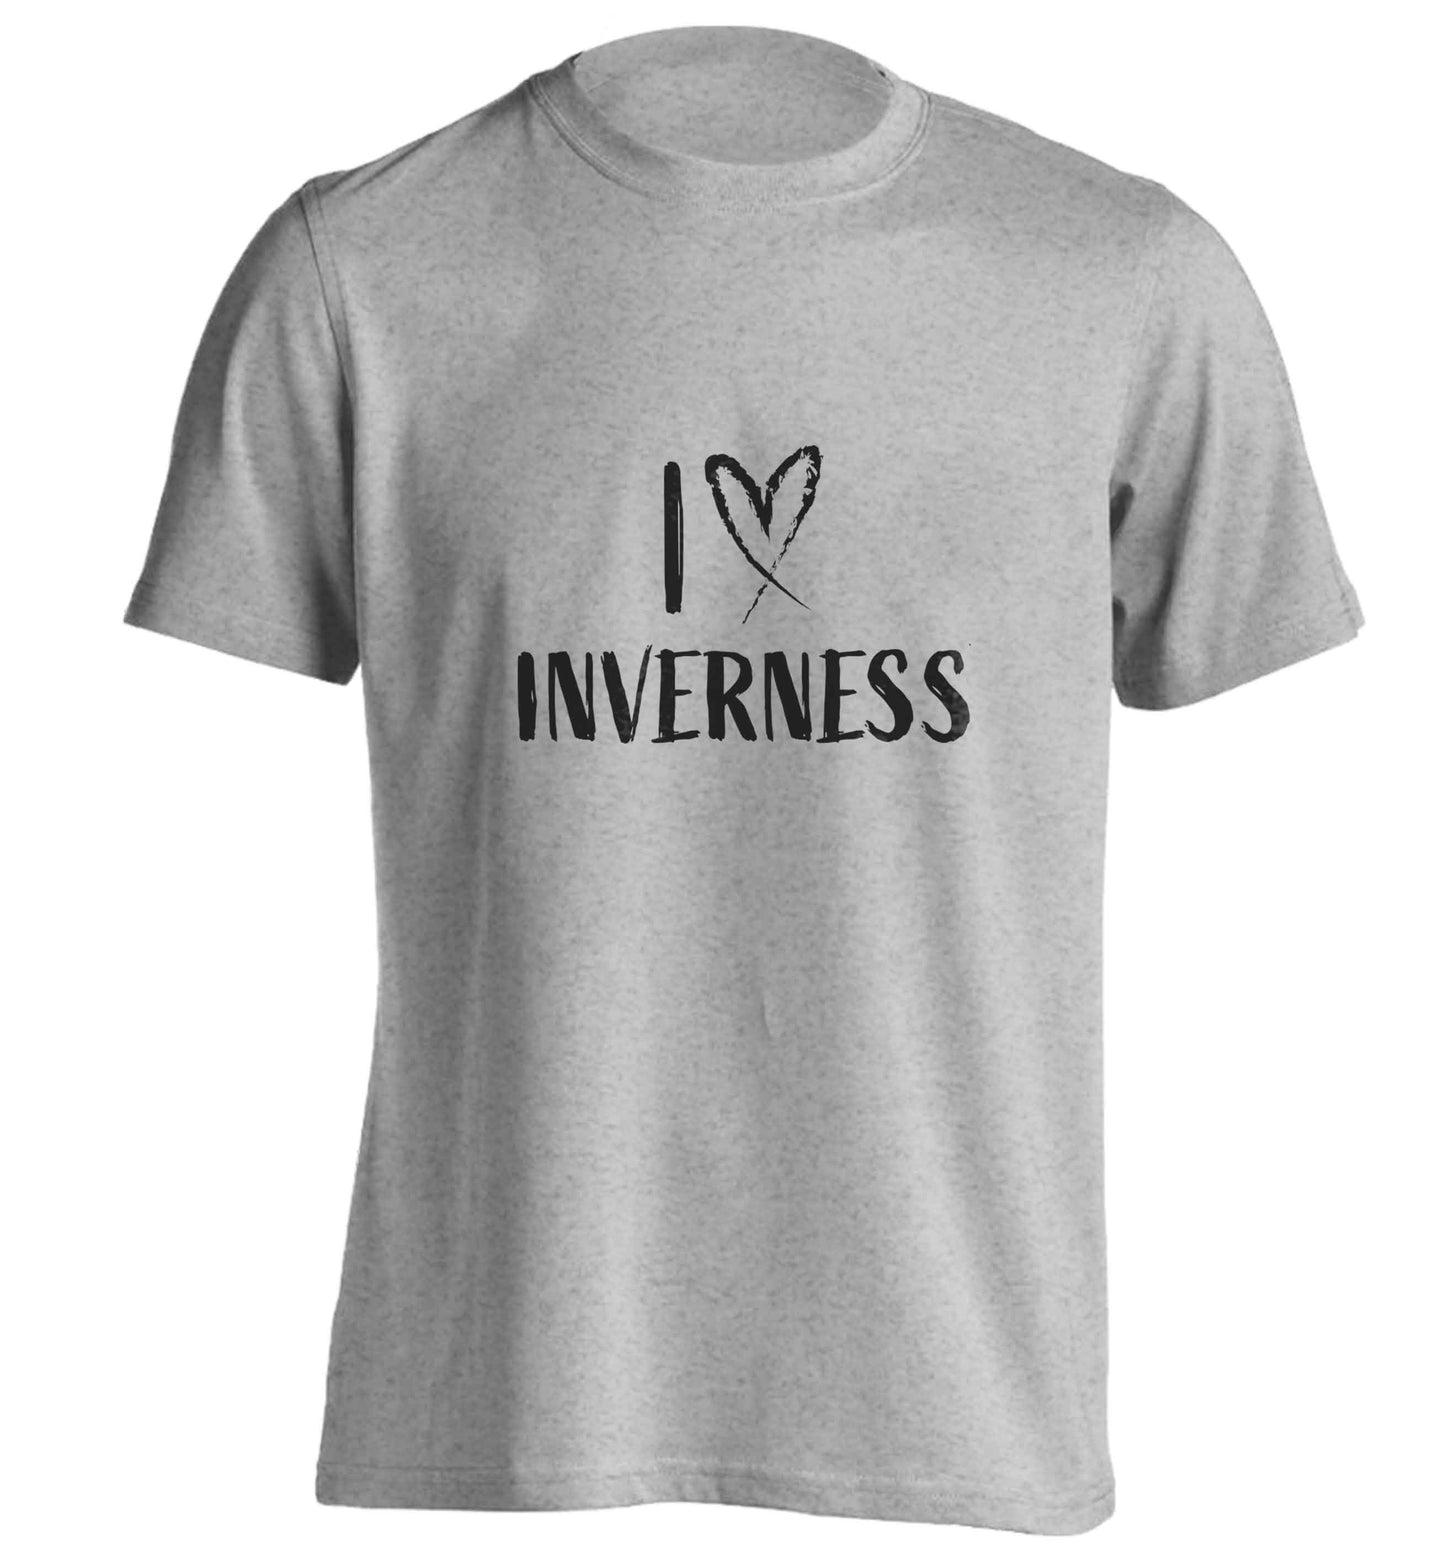 I love Inverness adults unisex grey Tshirt 2XL